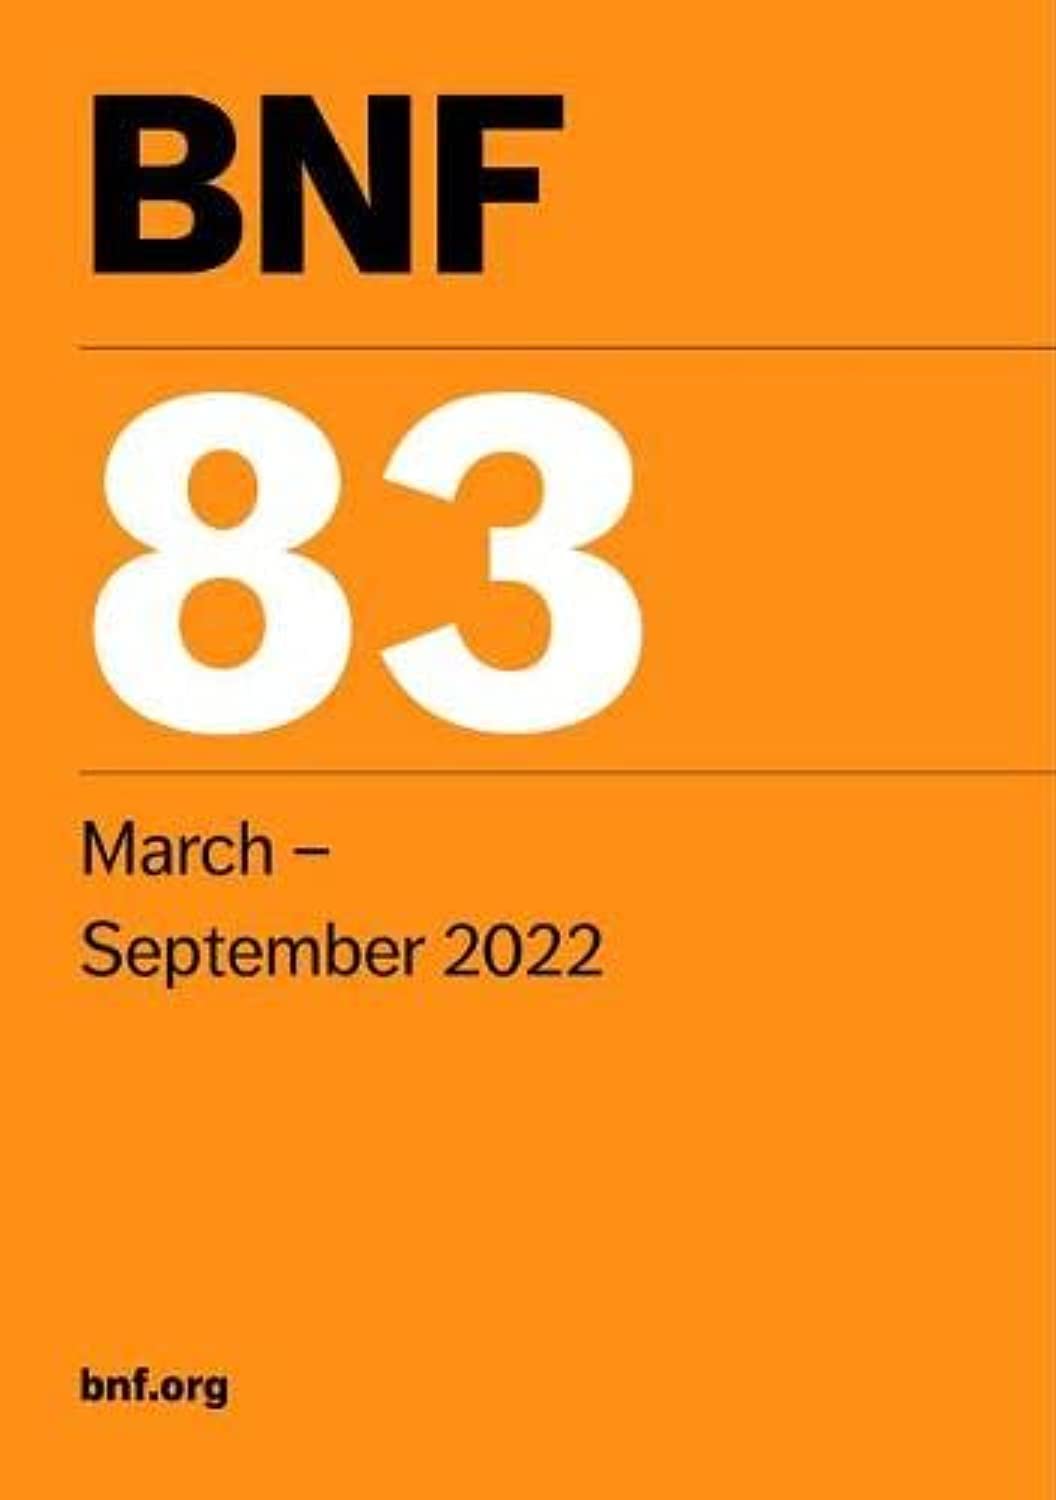 دانلود کتاب BNF 83 (British National Formulary) March 2022 By Joint Formulary Committee دانلود ایبوک BNF 83 (برنامه ملی بریتانیا) مارس 2022 